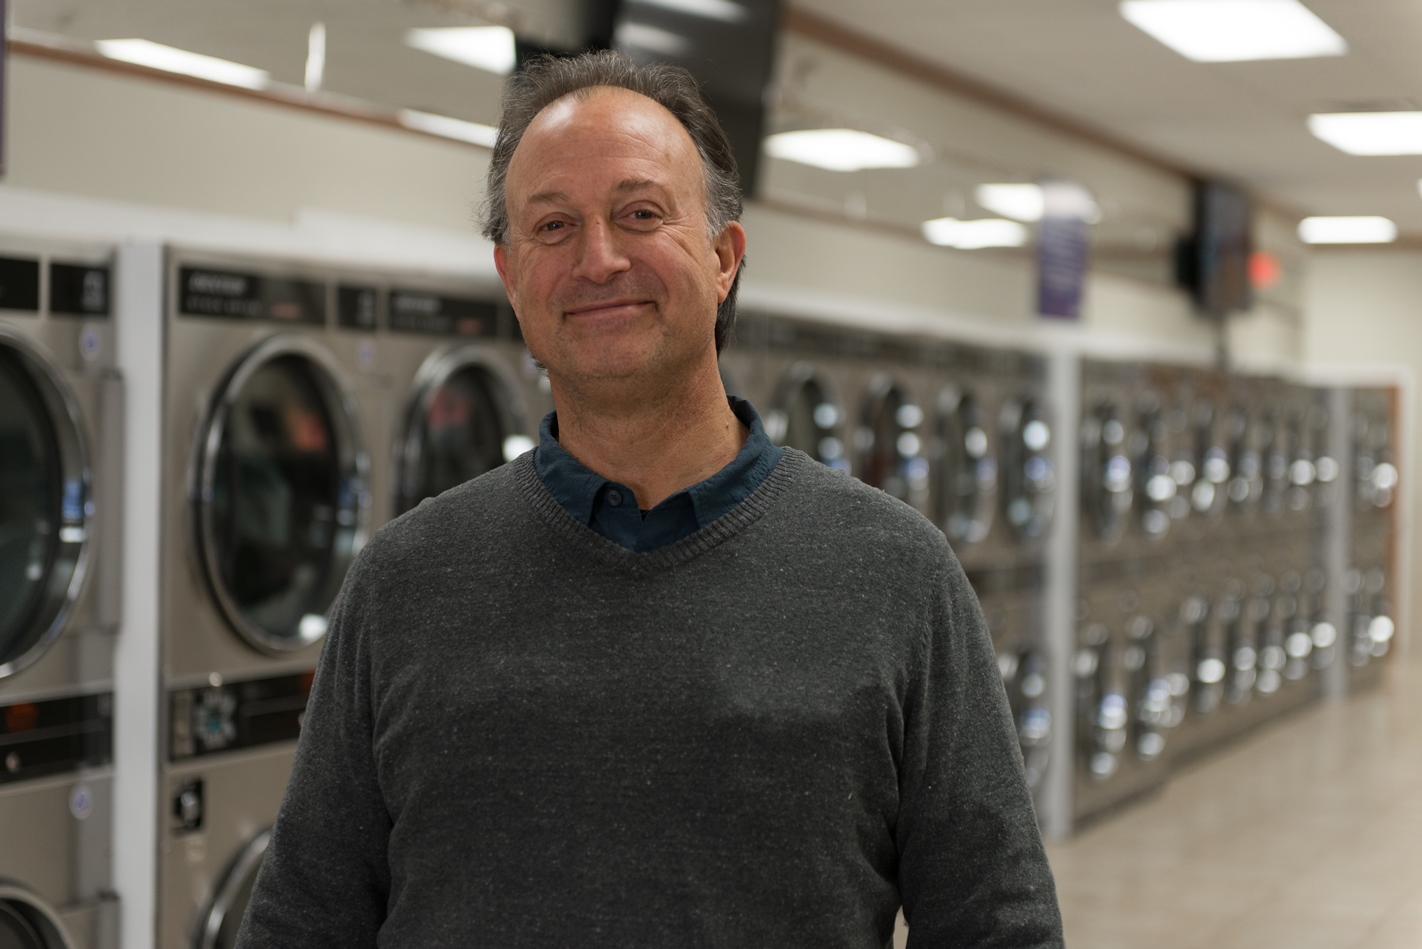 Video - Dan Marrazzo, Laundromat